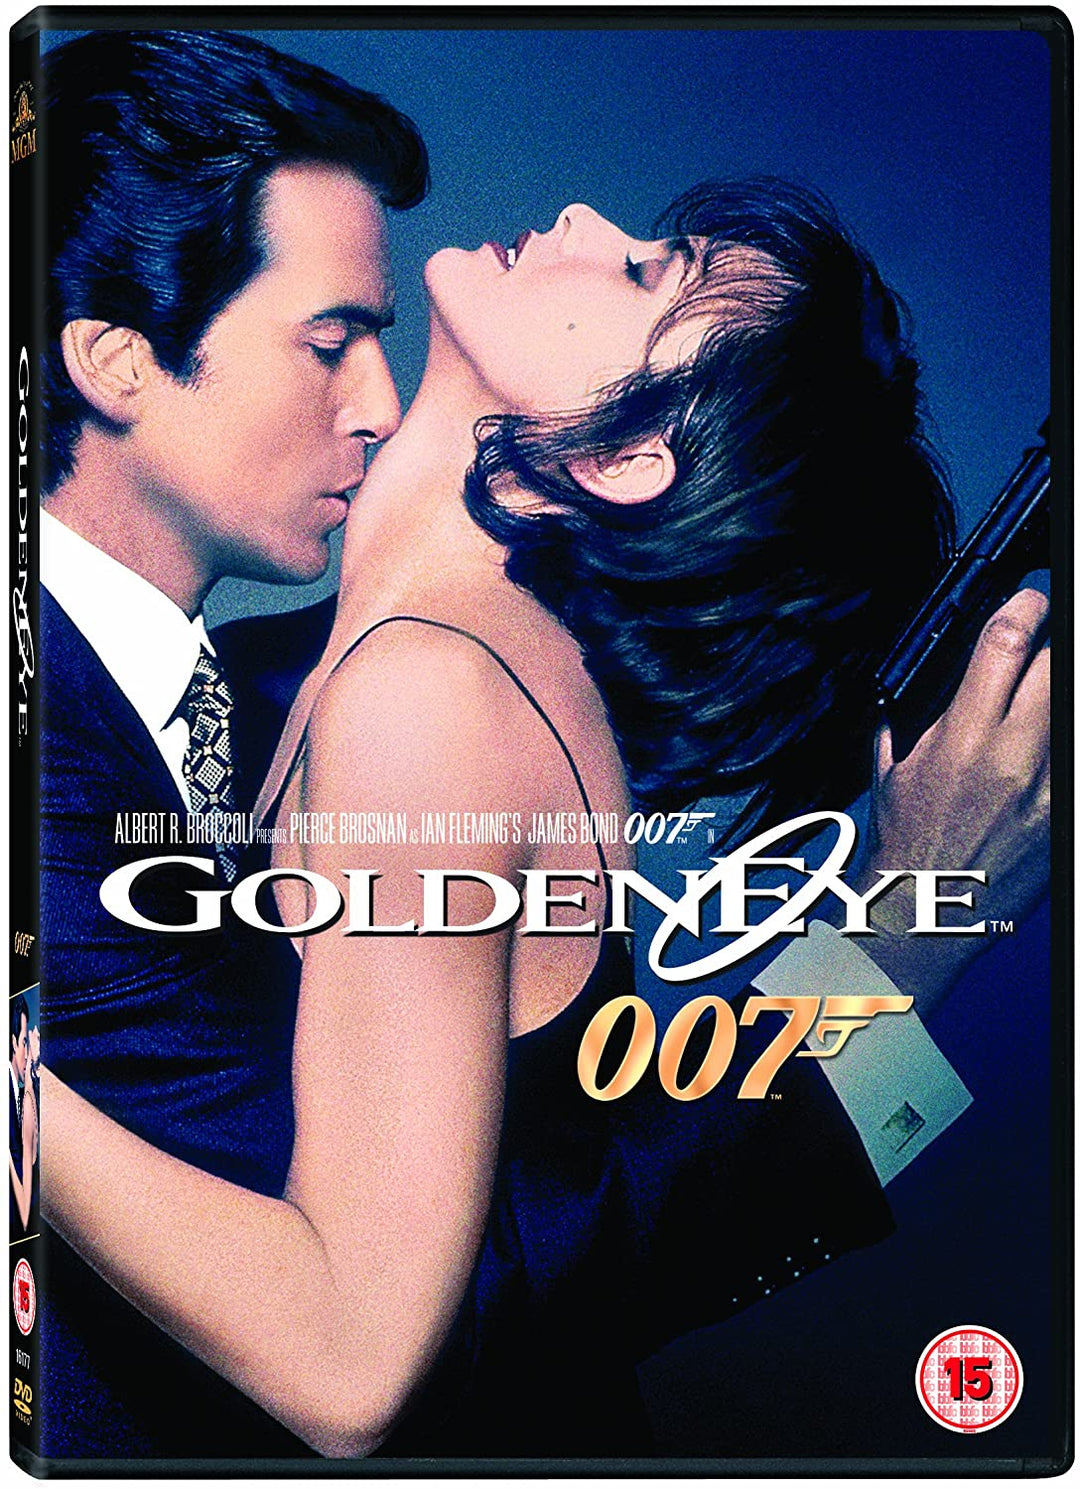 GoldenEye [1995] - Action/Adventure [DVD]